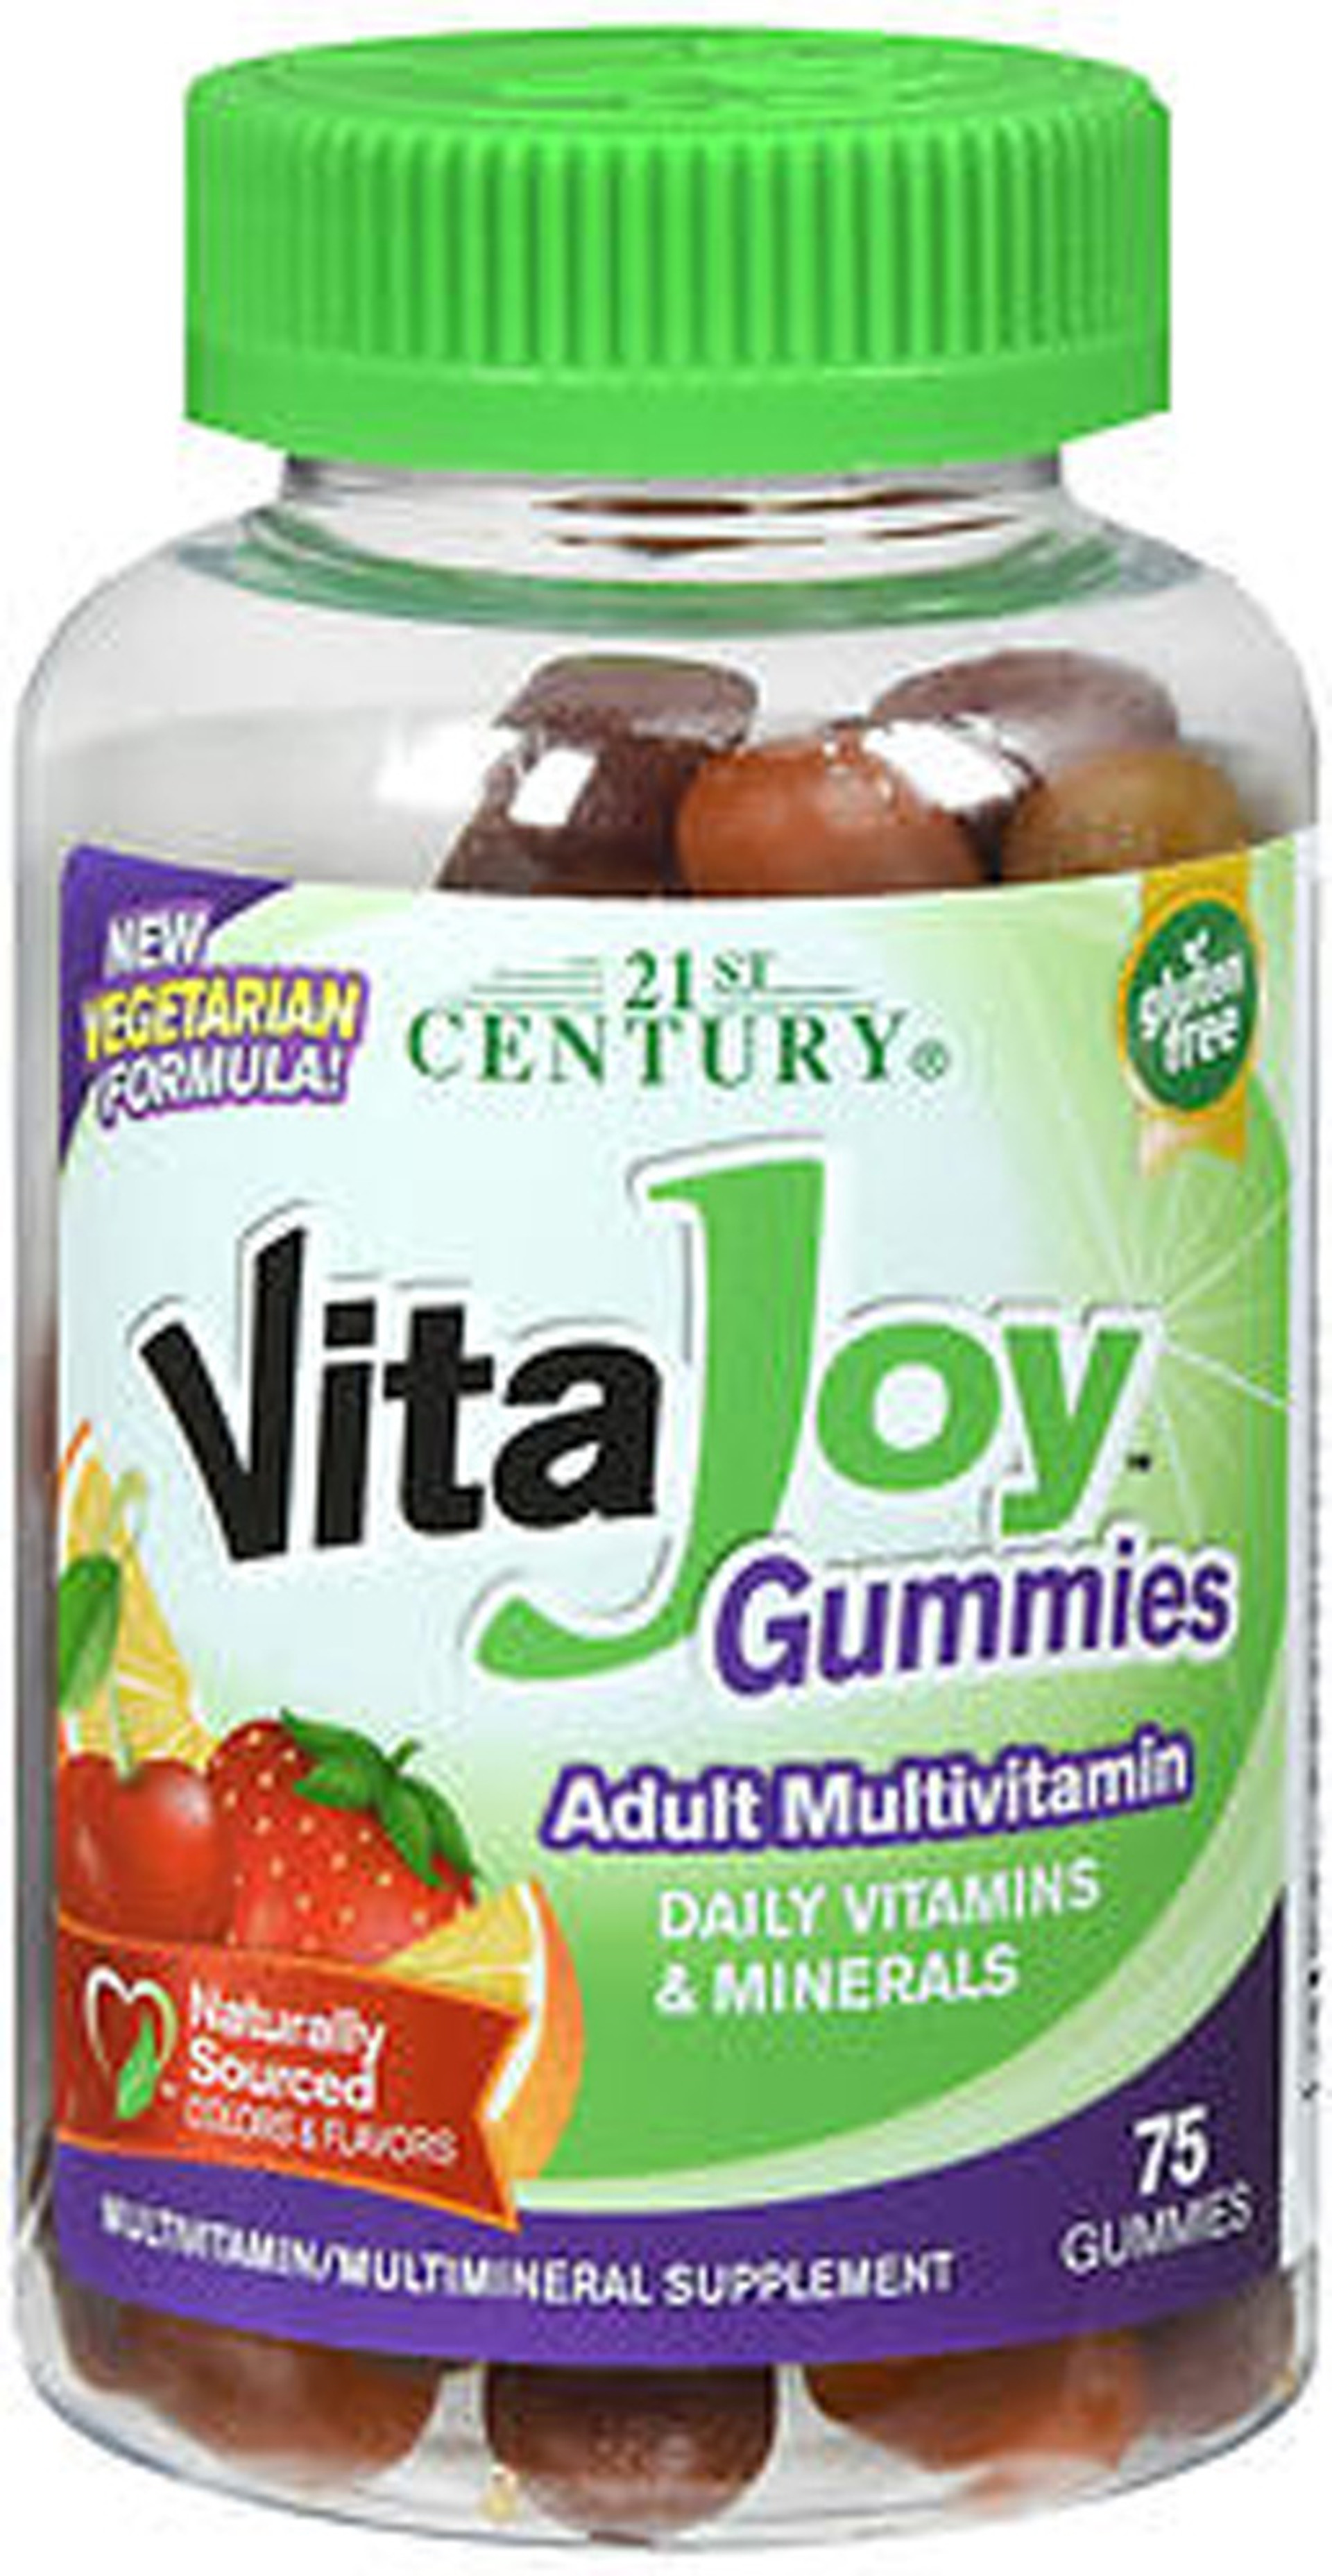 21st Century Vita Joy Adult Multivitamin Gummies - 75 gummies - The ...